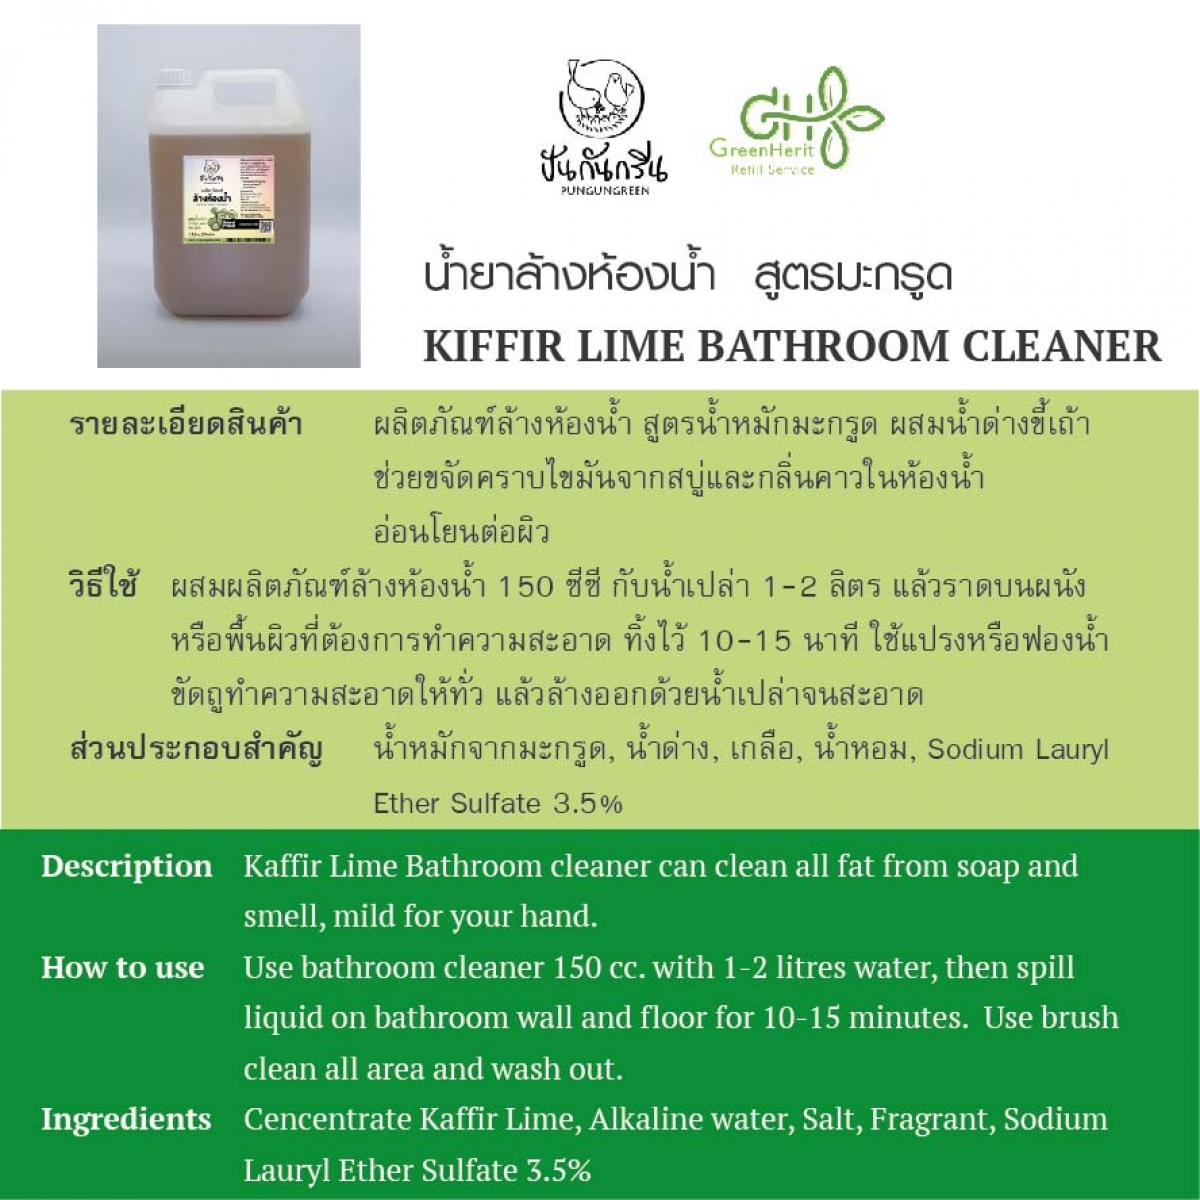 Organic Product > Kaffir Lime Bathroom Cleaner